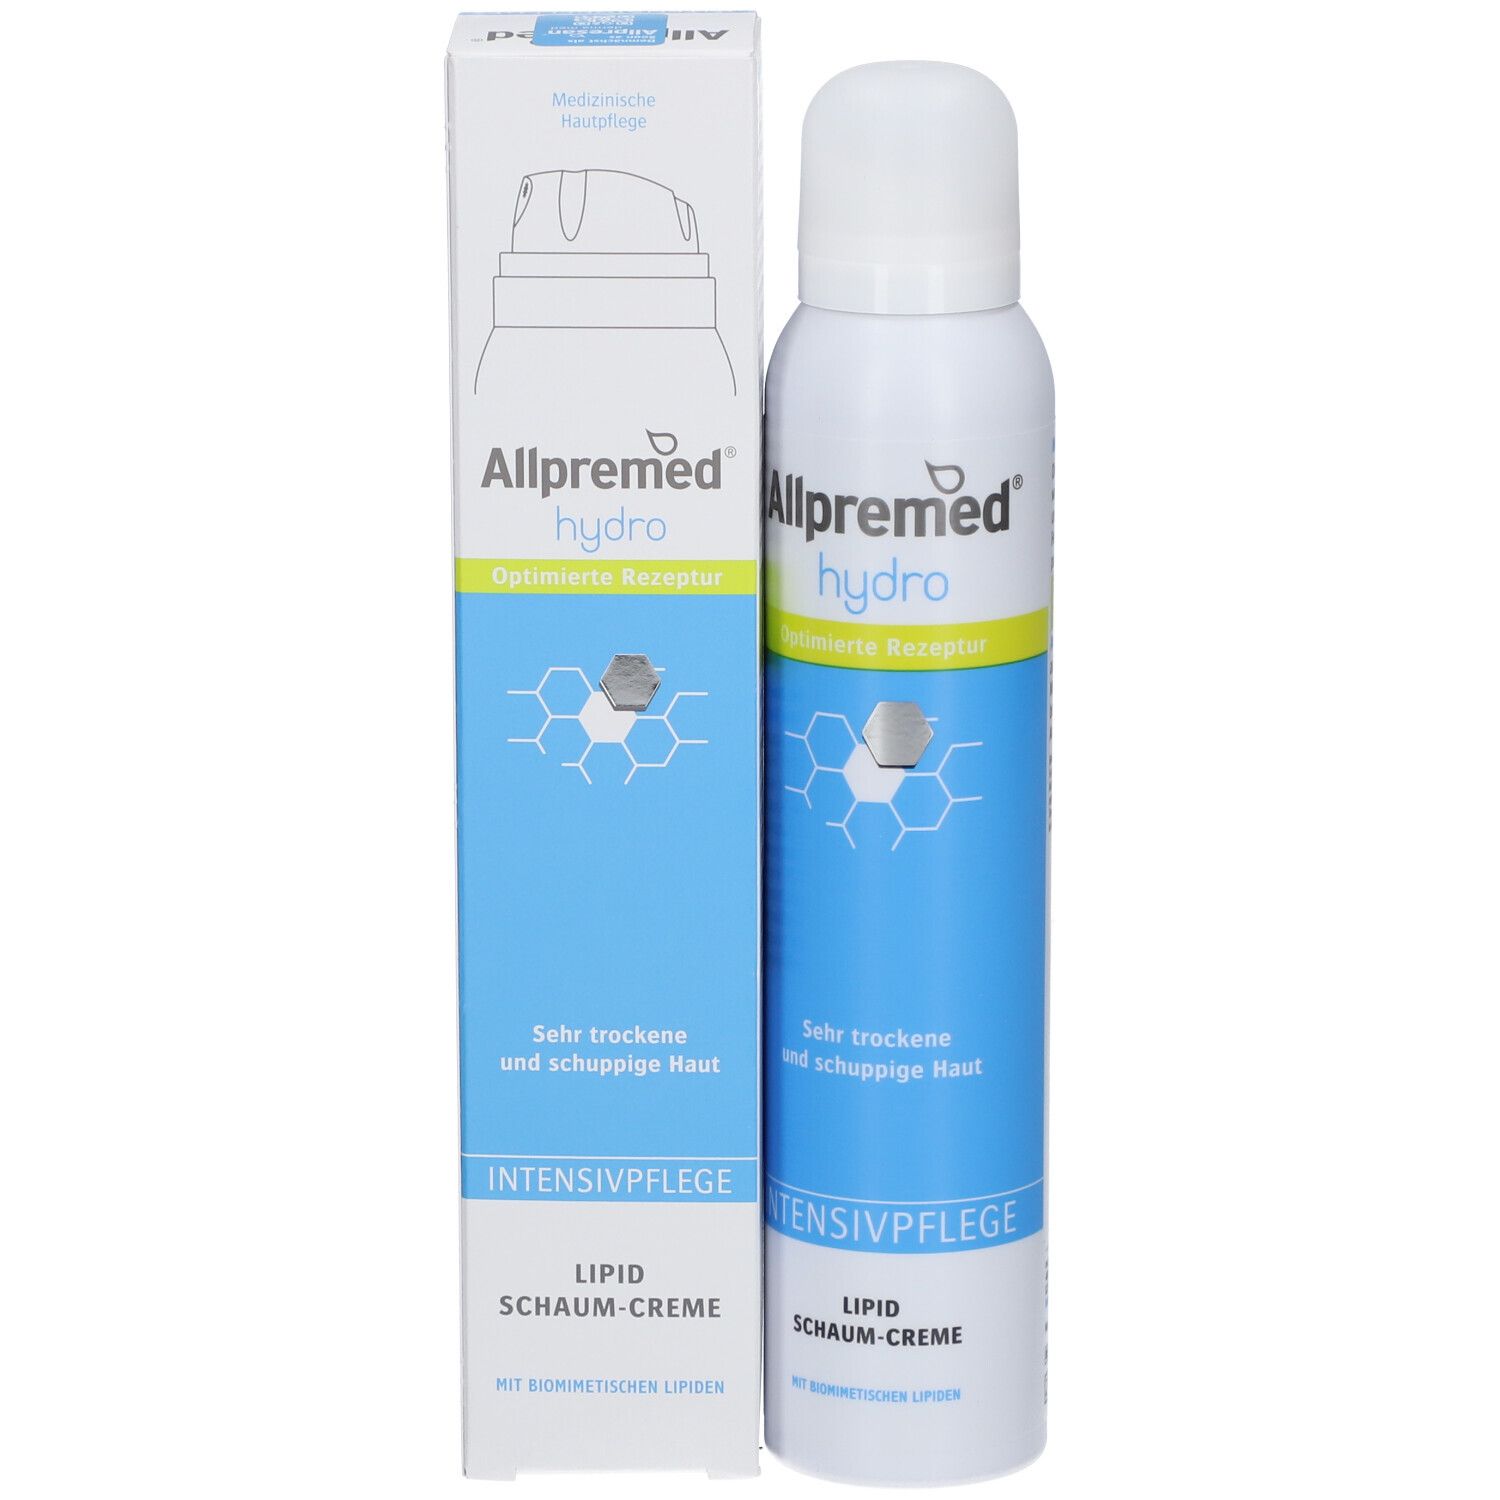 Allpremed® hydro Original Schaum-Creme INTENSIV